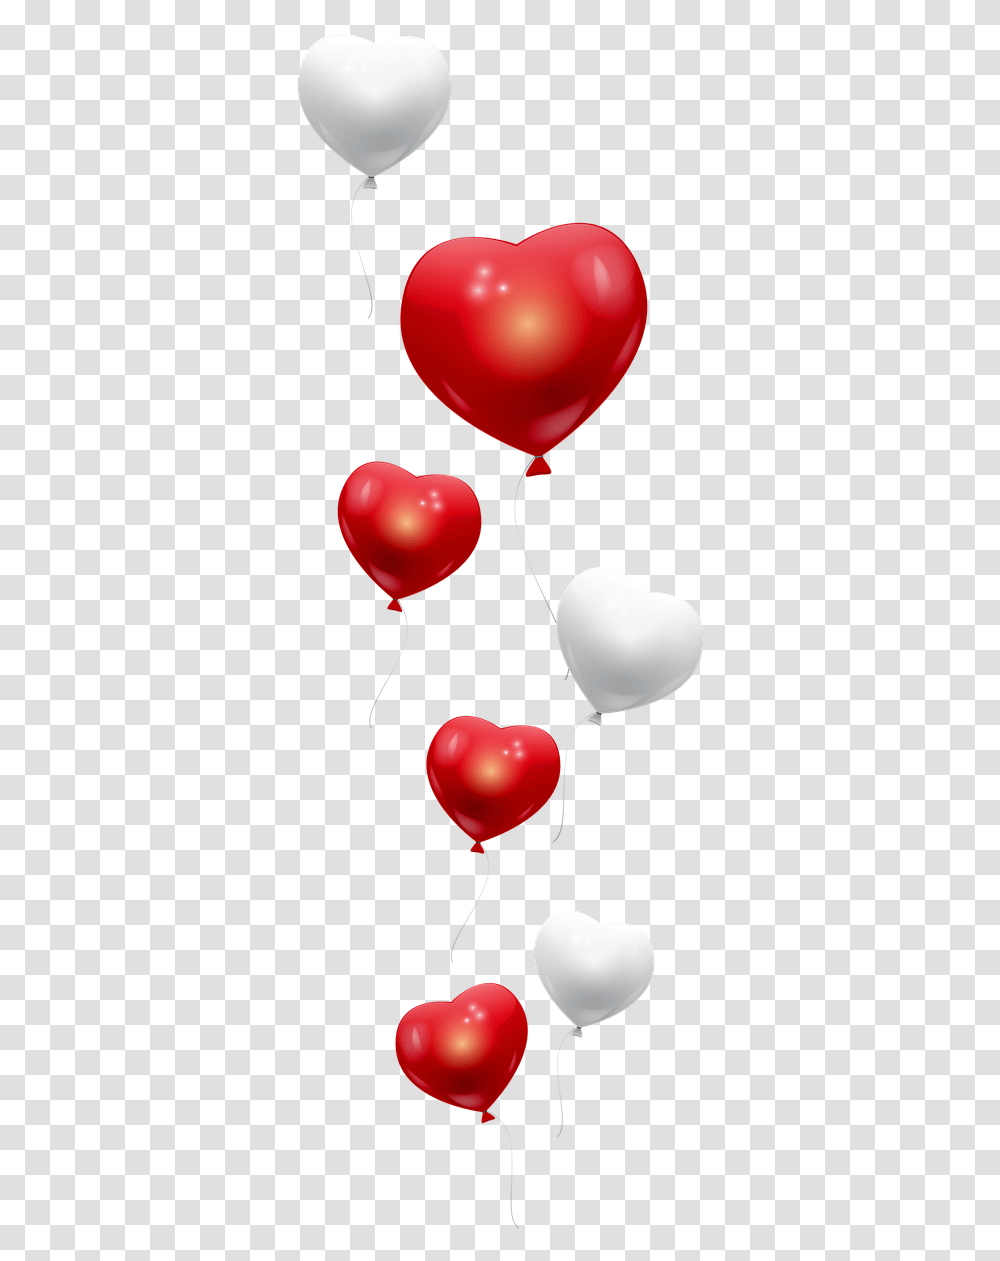 Valentine Balloons Heart Free Image On Pixabay Balon Merah Putih Transparent Png